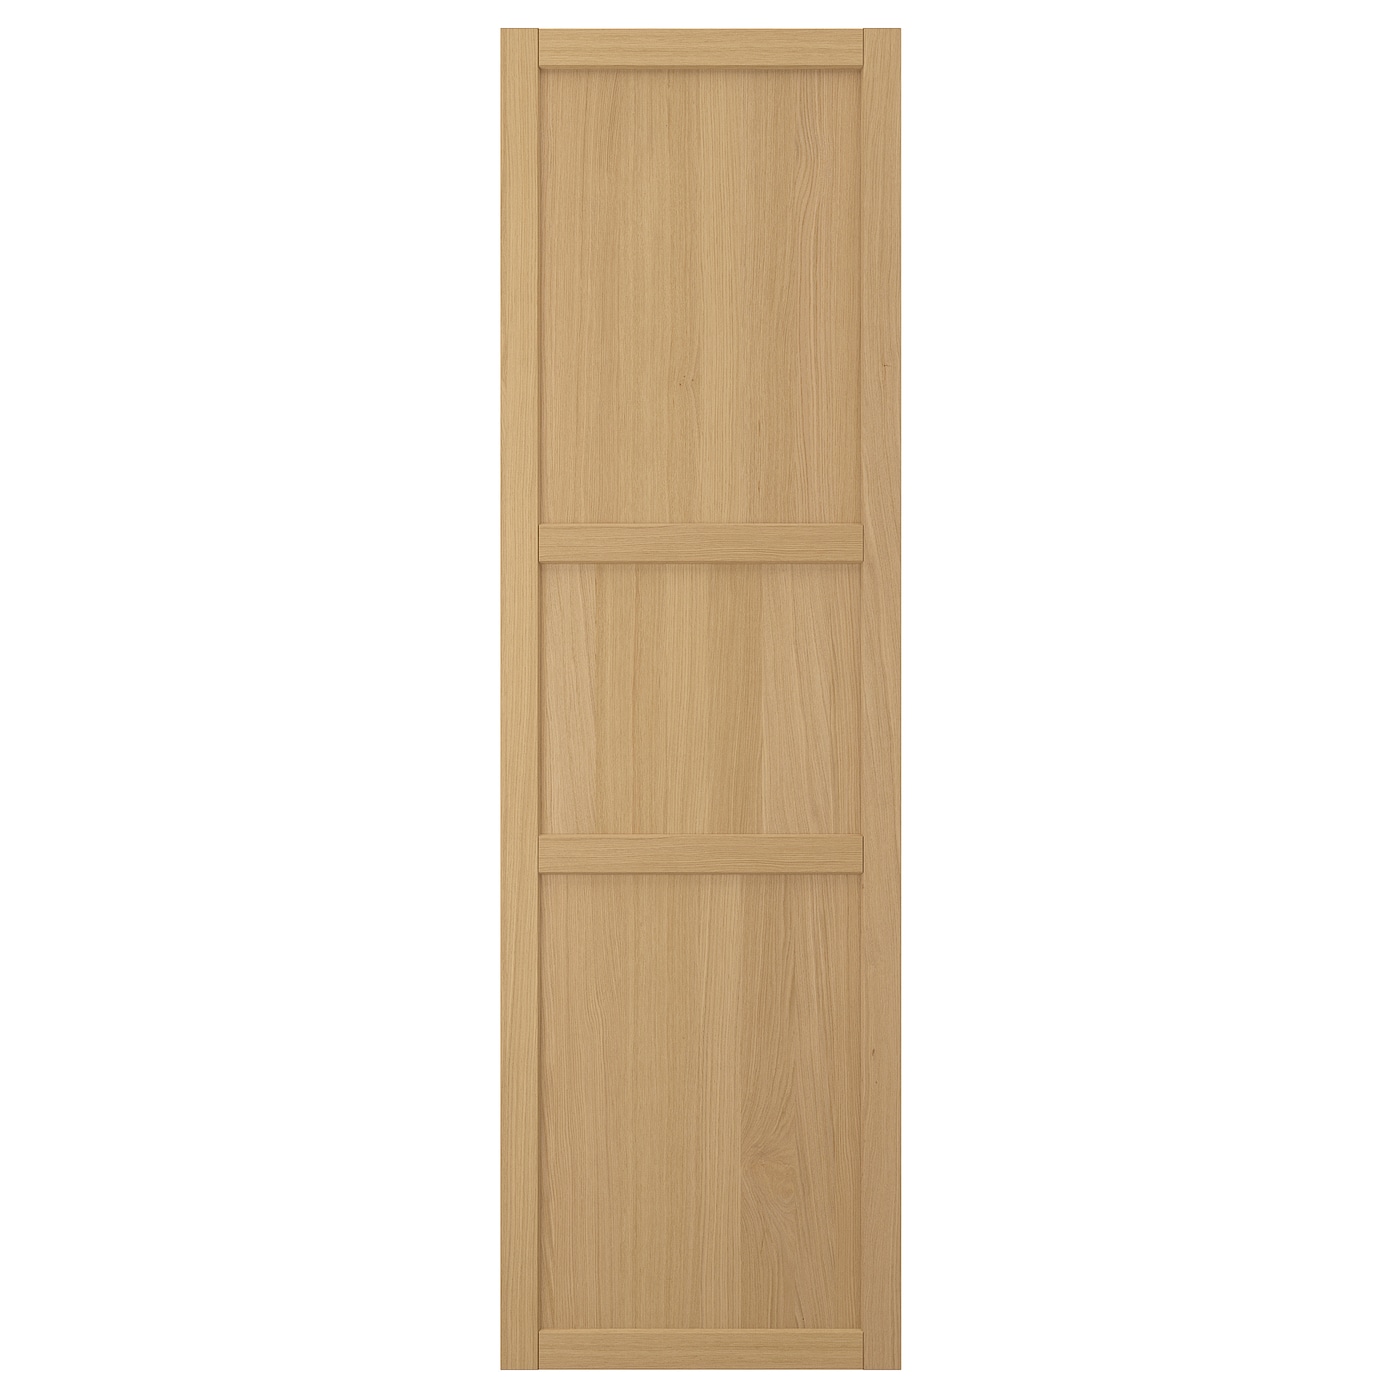 Дверца - FORSBACKA IKEA/ ФОРСБАКА ИКЕА,  200х60  см, под беленый дуб